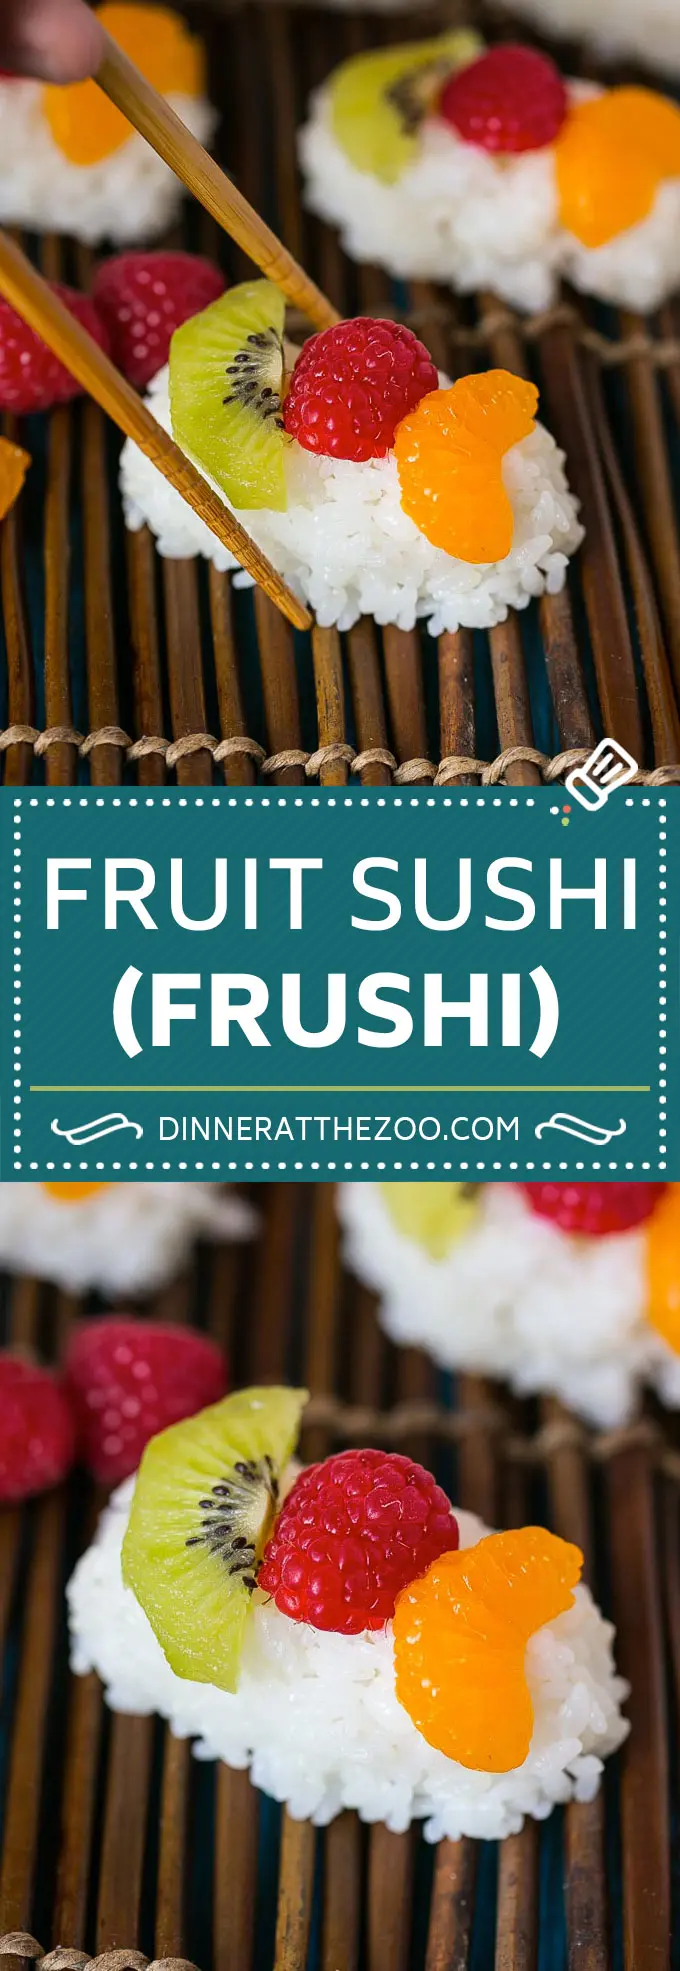 Rețetă de sushi din fructe | Dessert Sushi #fruit #sushi #snack #dessert #dinneratthezoo